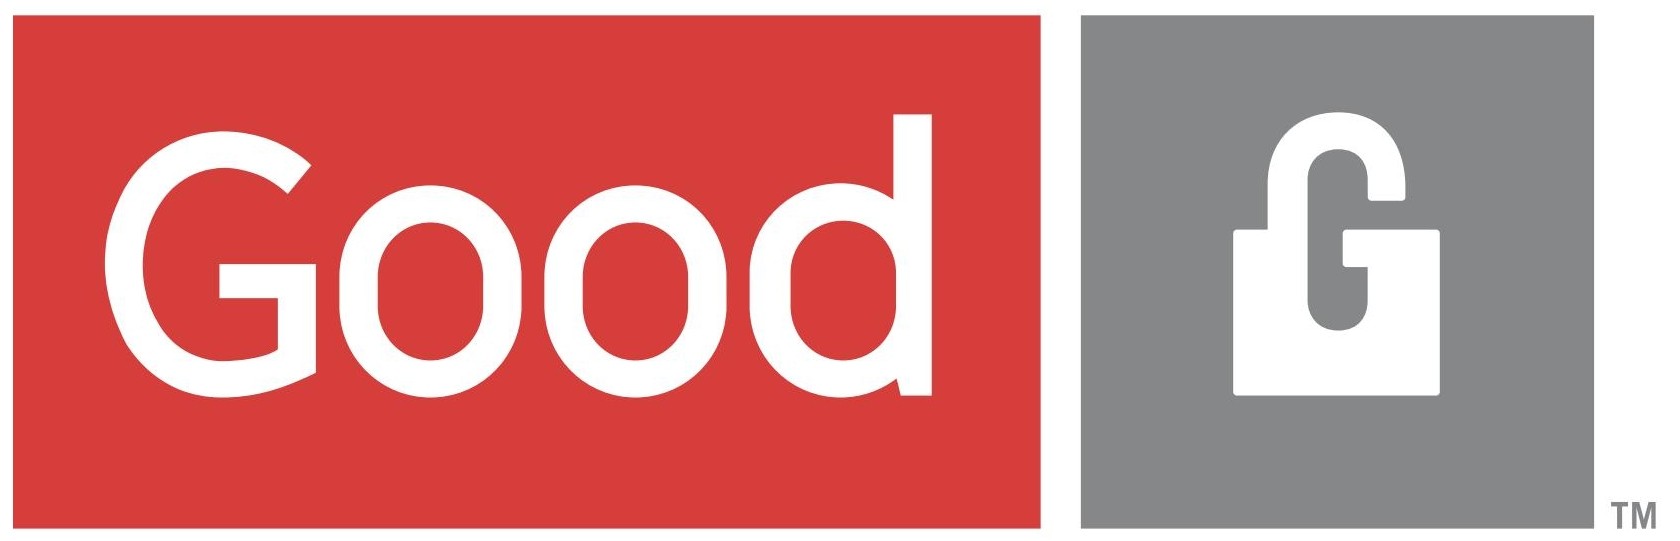 Good Logo [Technology] png